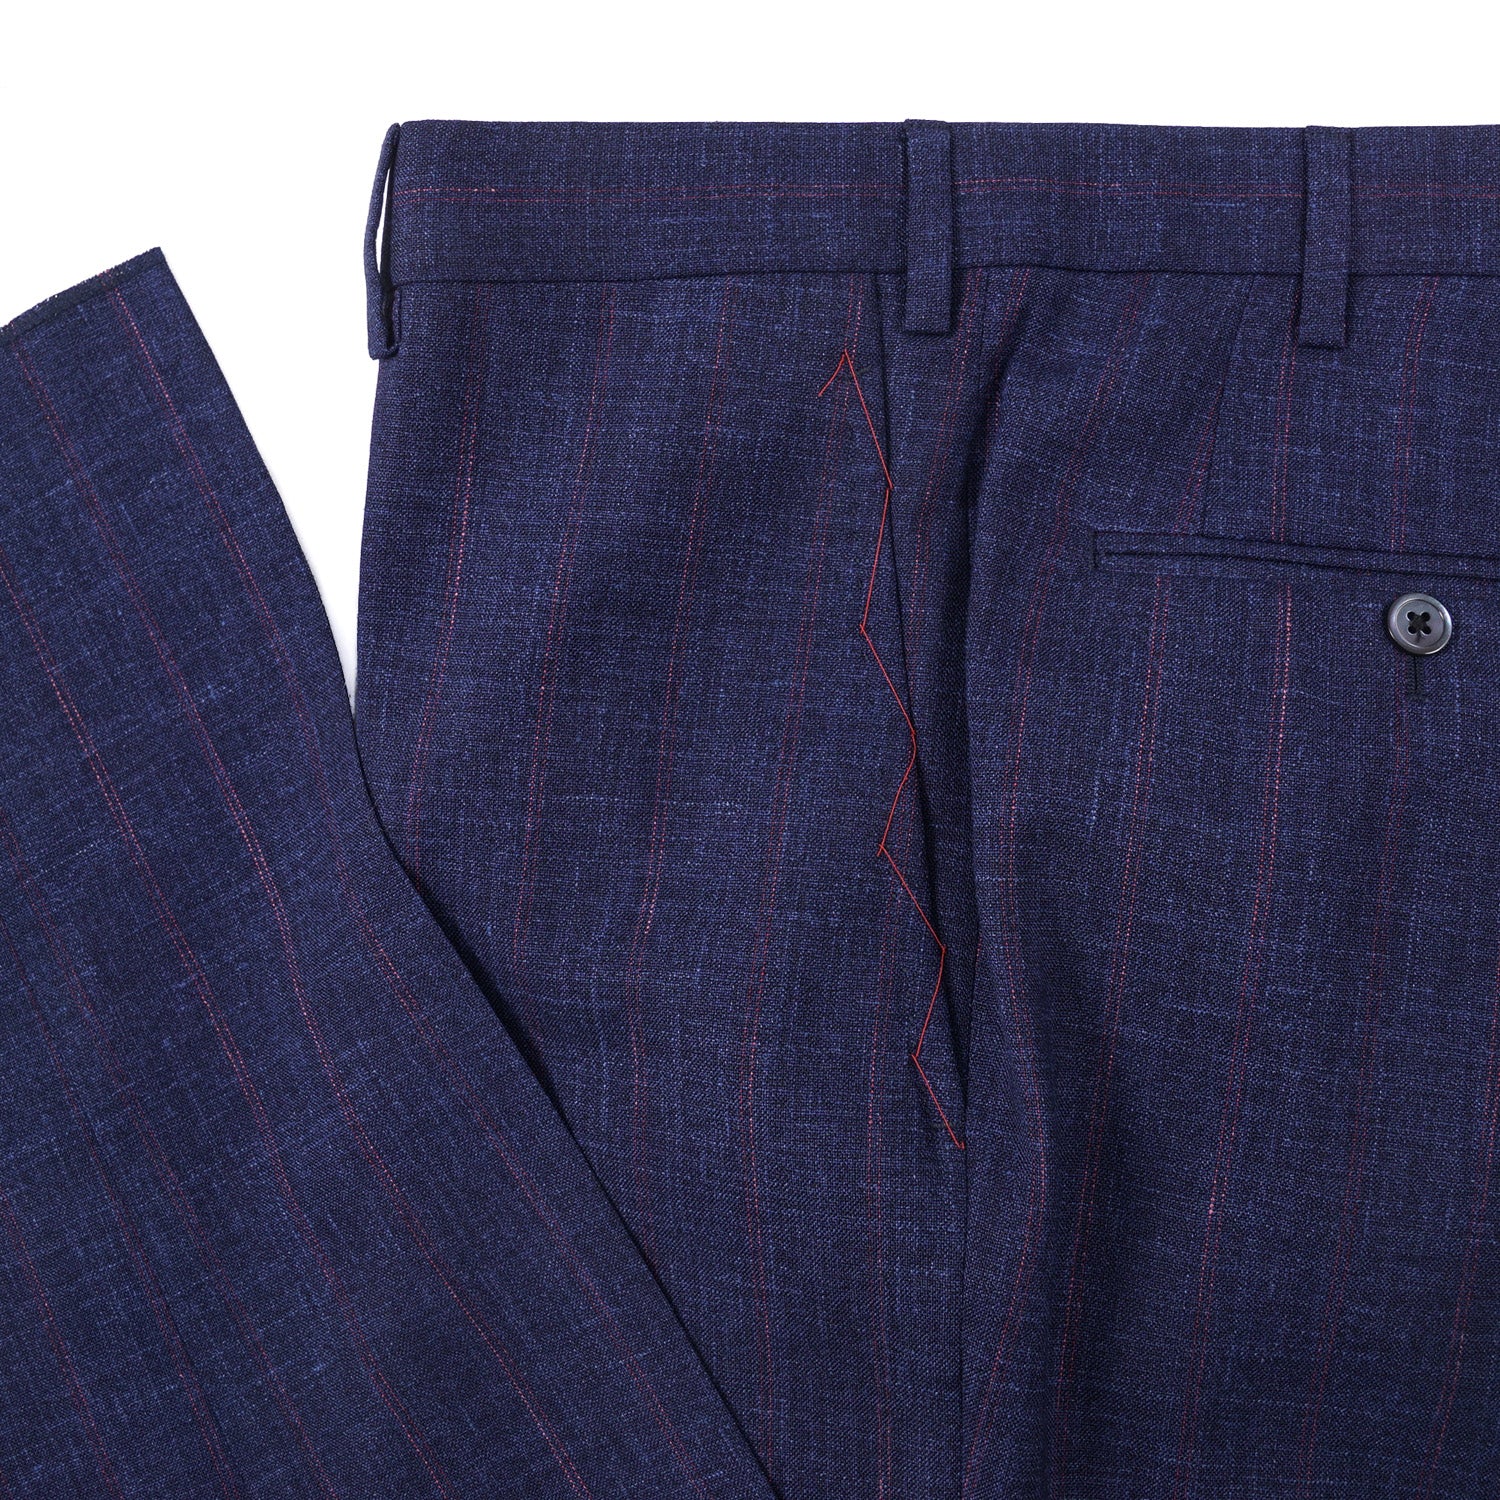 Isaia 'Marechiaro' Wool-Silk-Linen Suit - Top Shelf Apparel